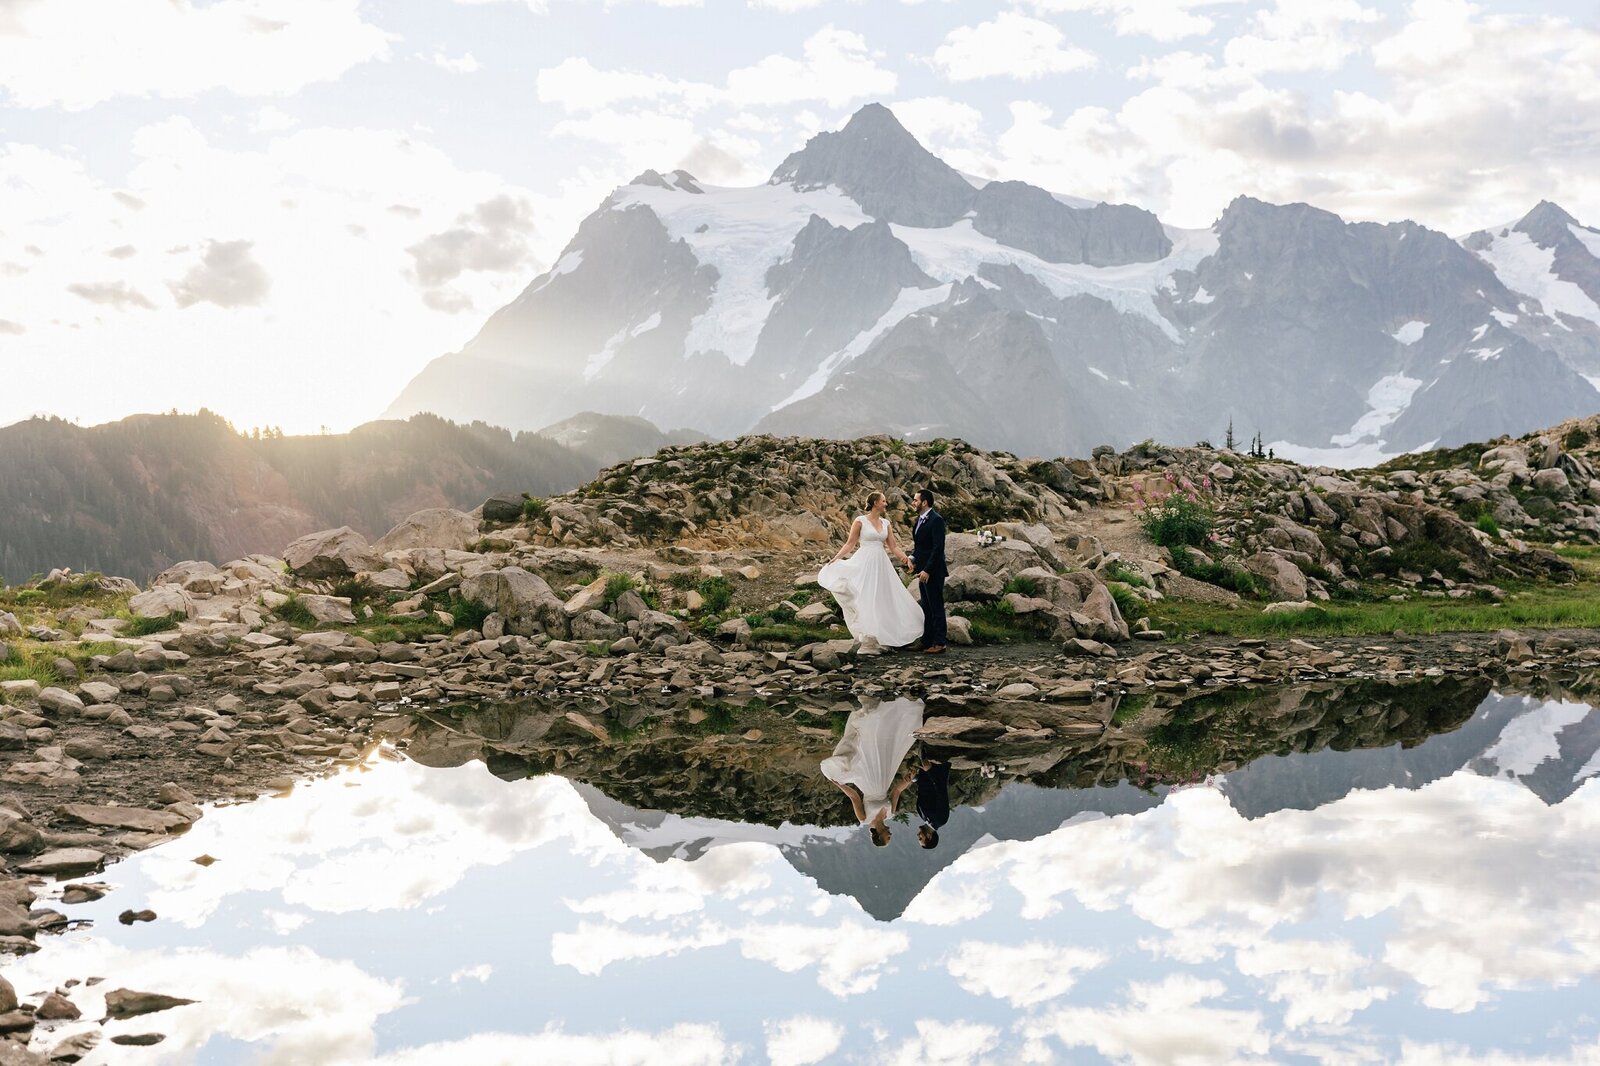 Artist's Pint Mt. Shuksan adventure elopement photographer | Erica Swantek Photography